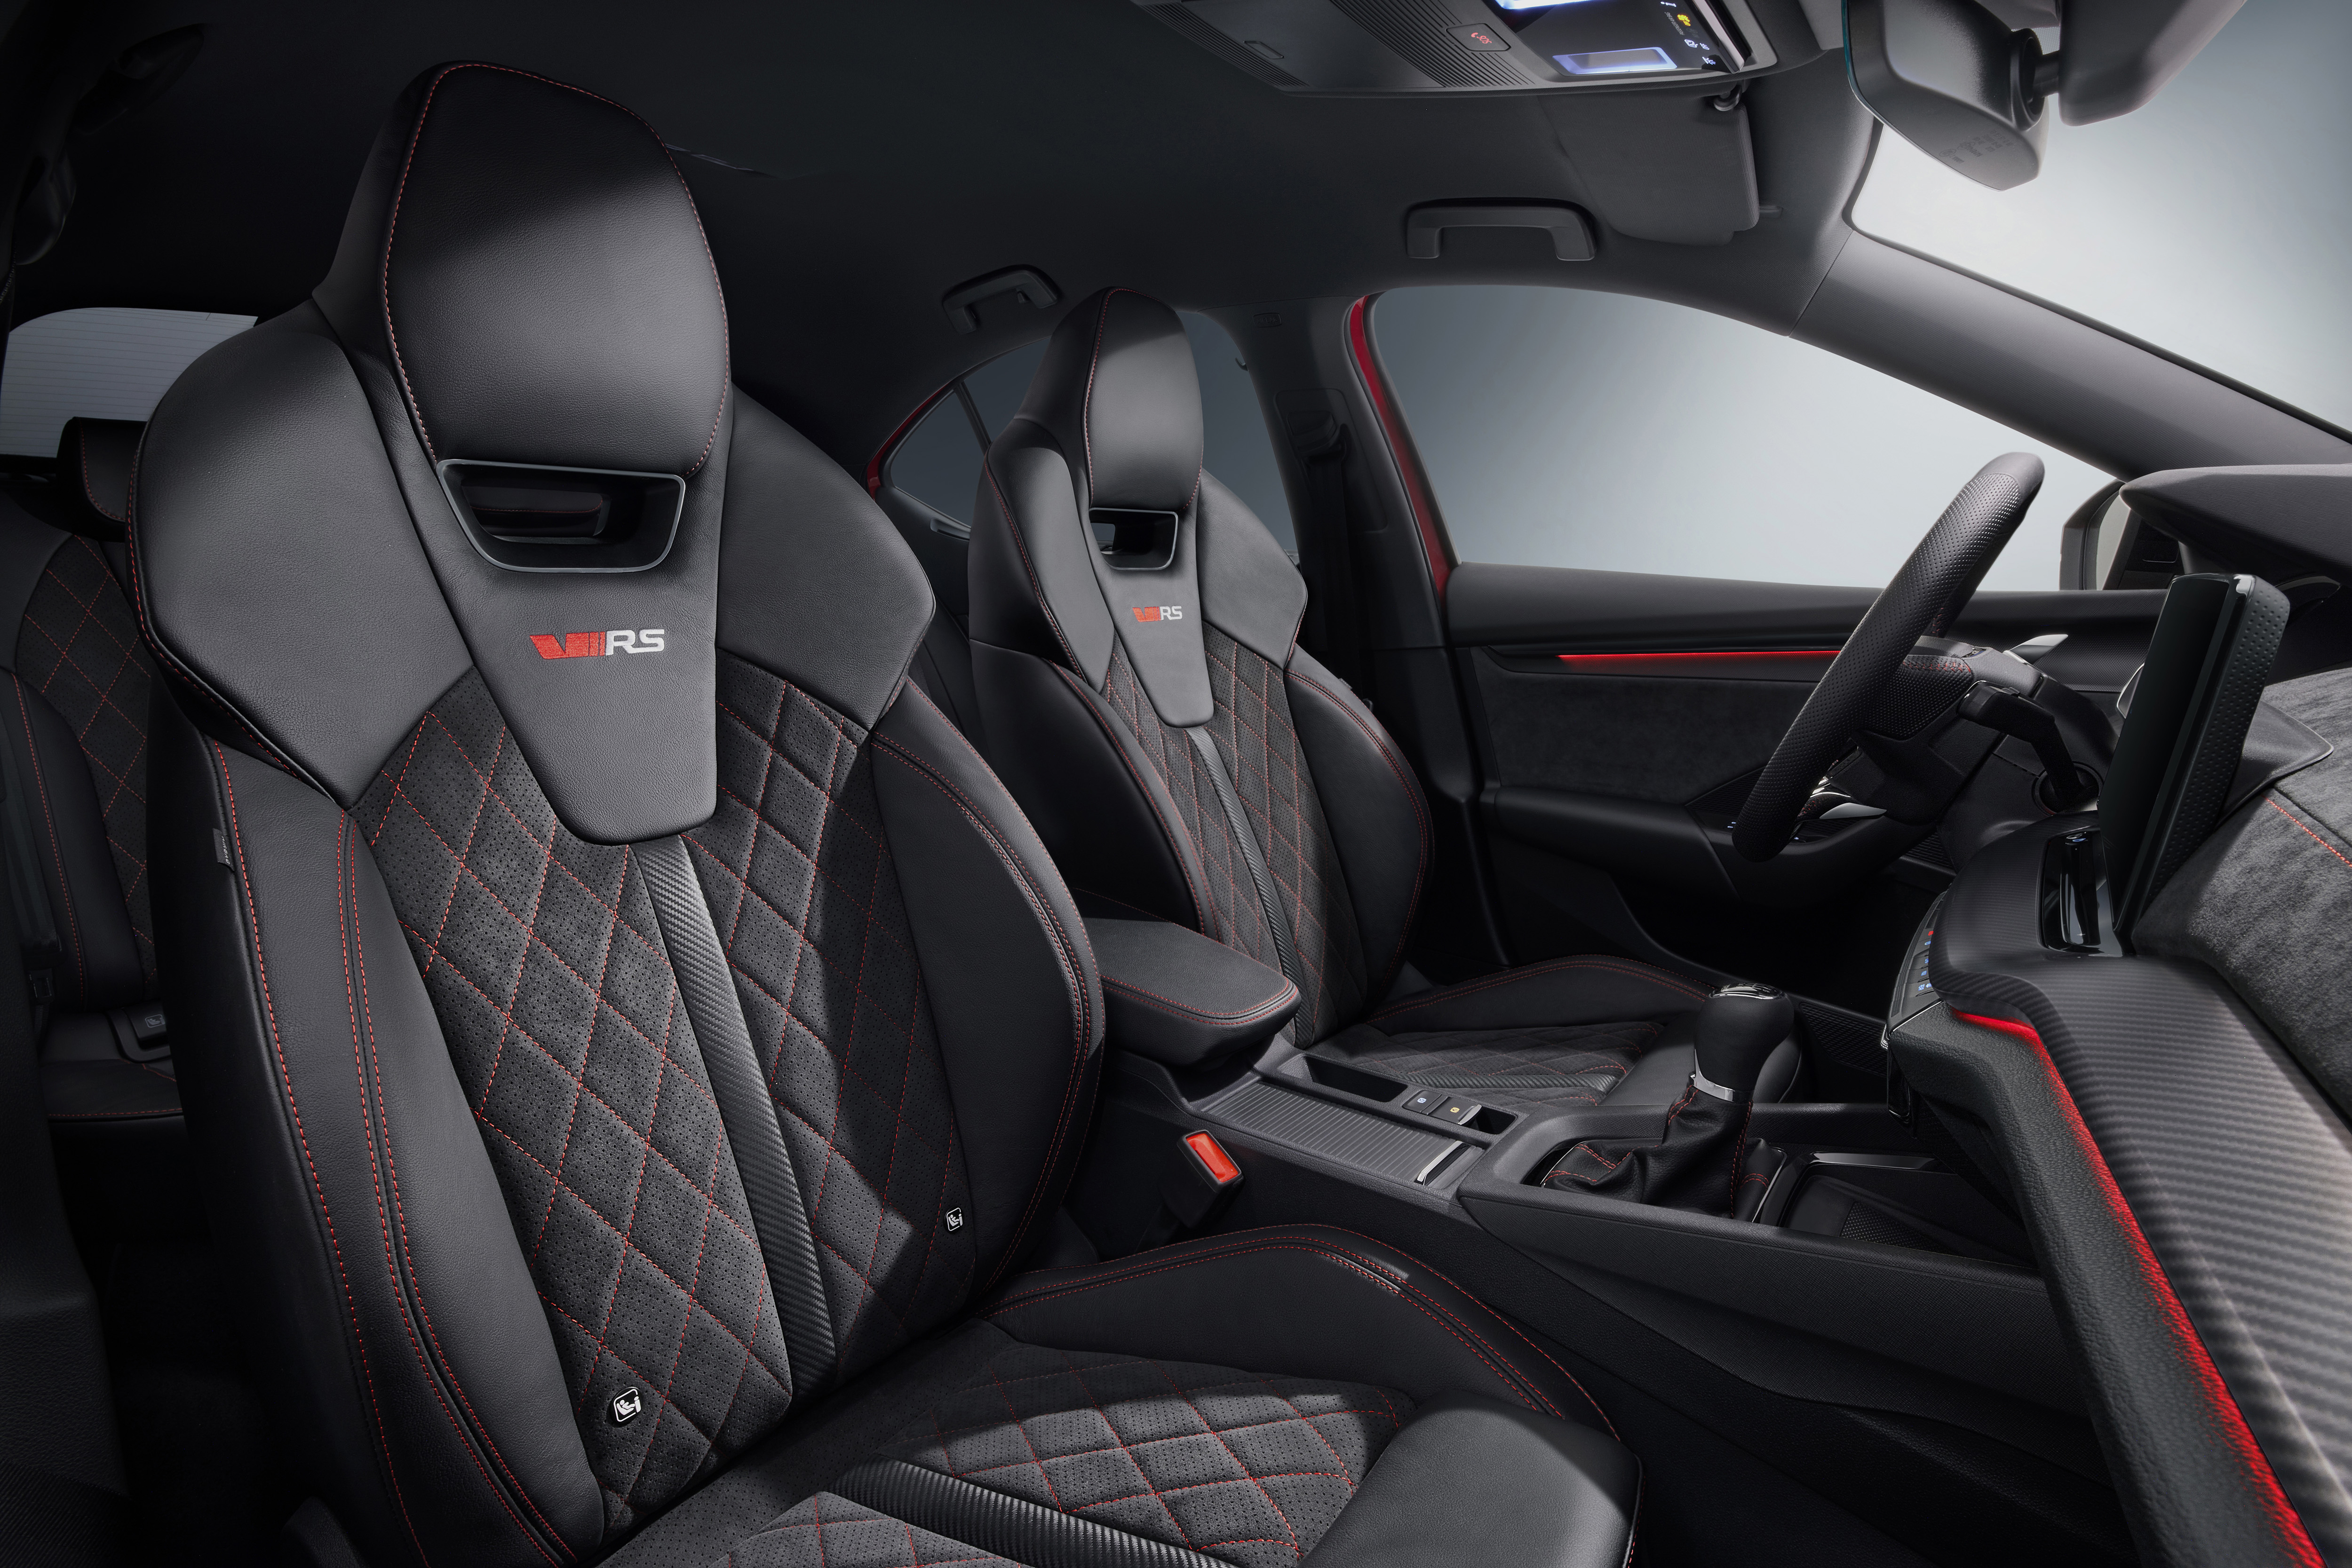 Skoda Octavia Autositze mit individuellen Sitzbezügen neu beziehen